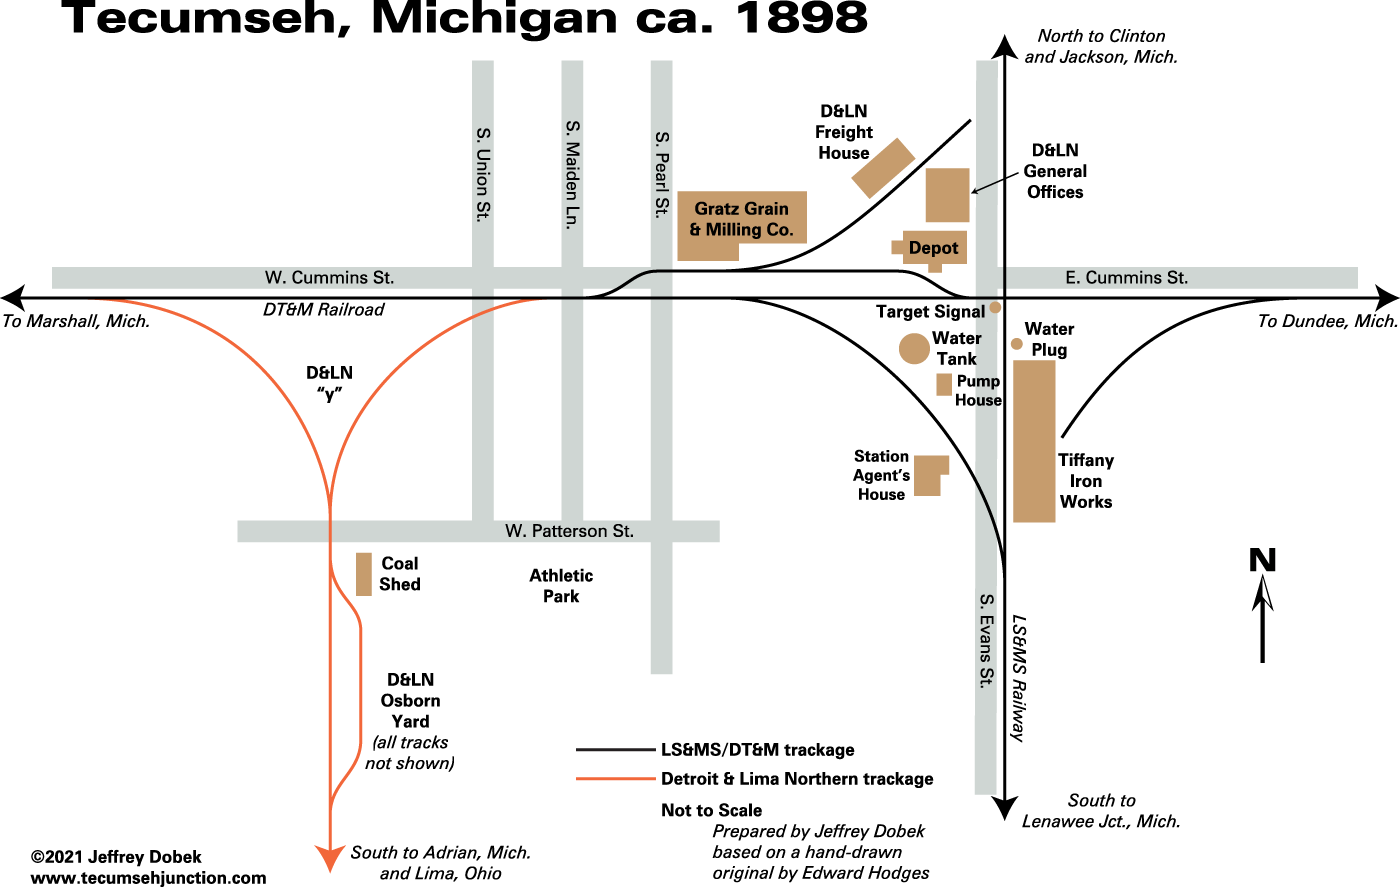 Rail lines in Tecumseh, Michigan ca. 1898